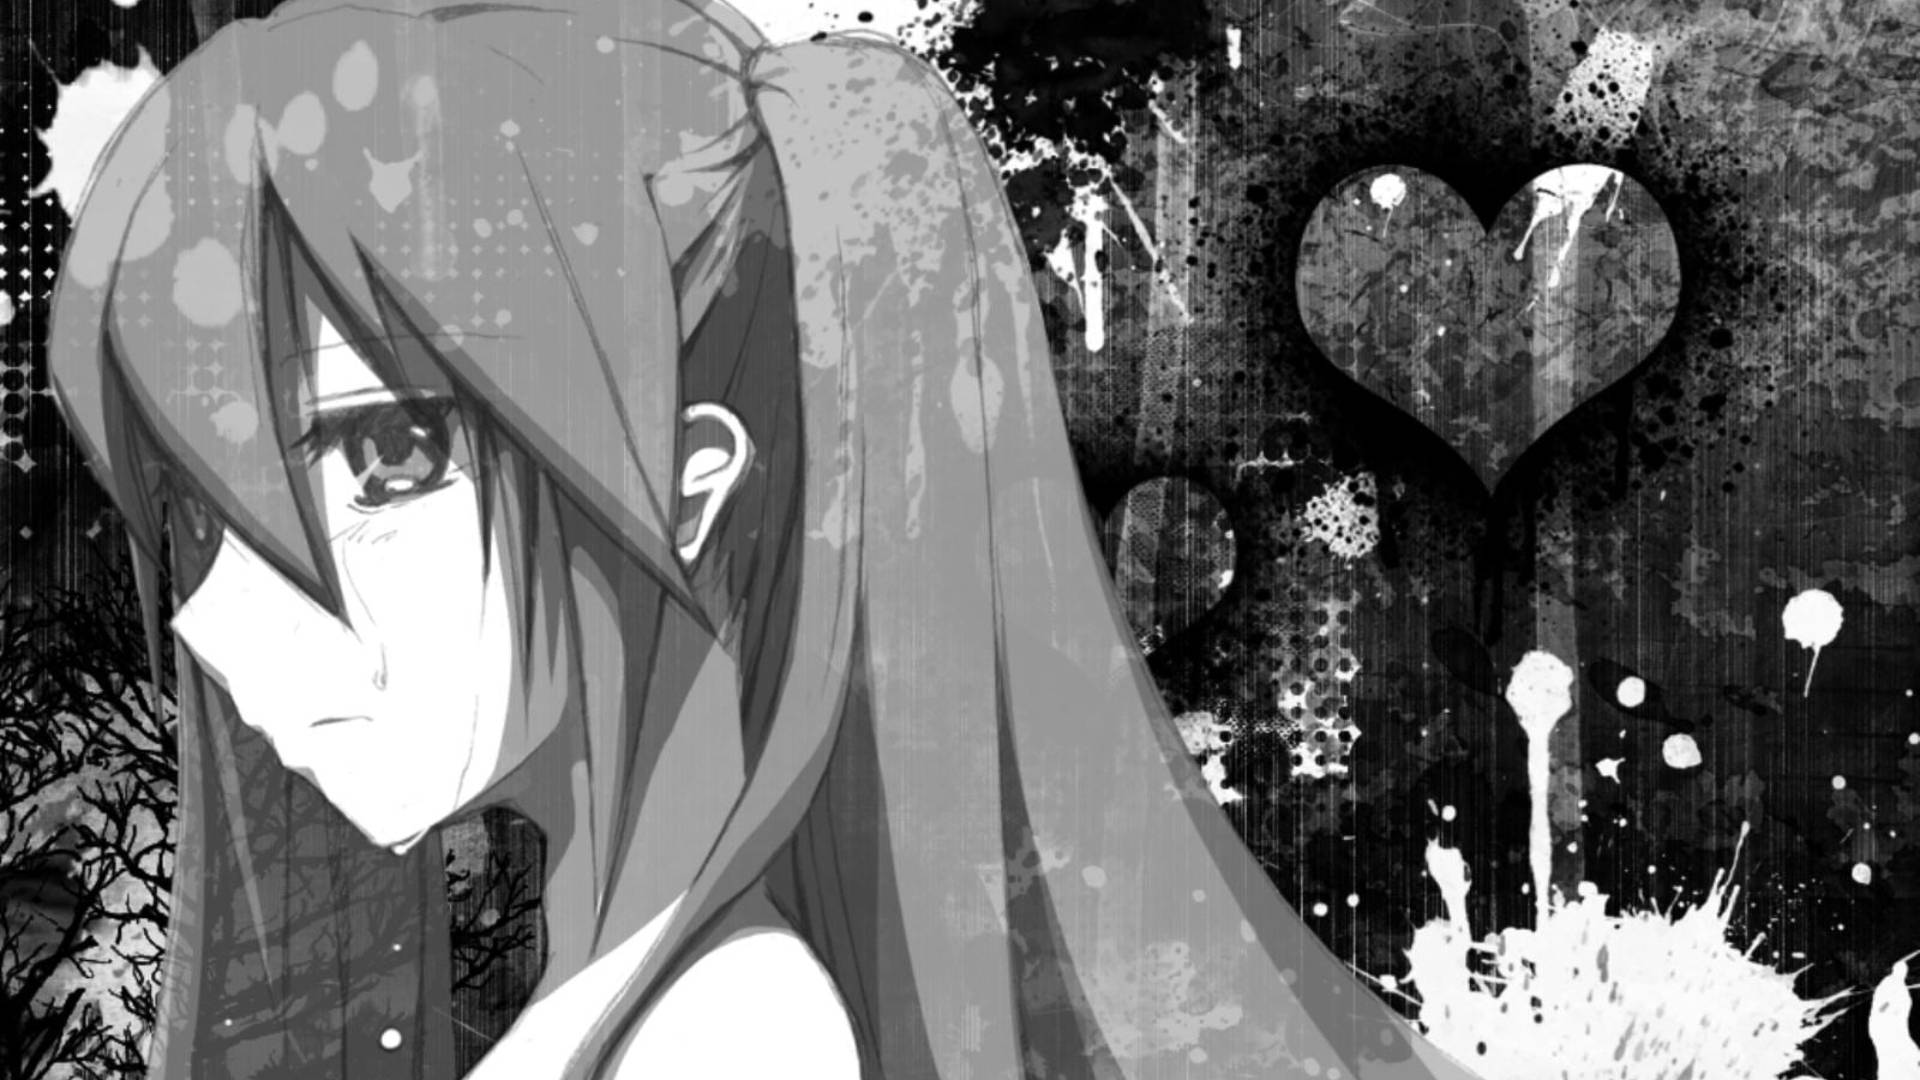 Free Sad Anime Wallpaper Downloads, [300+] Sad Anime Wallpapers for FREE |  